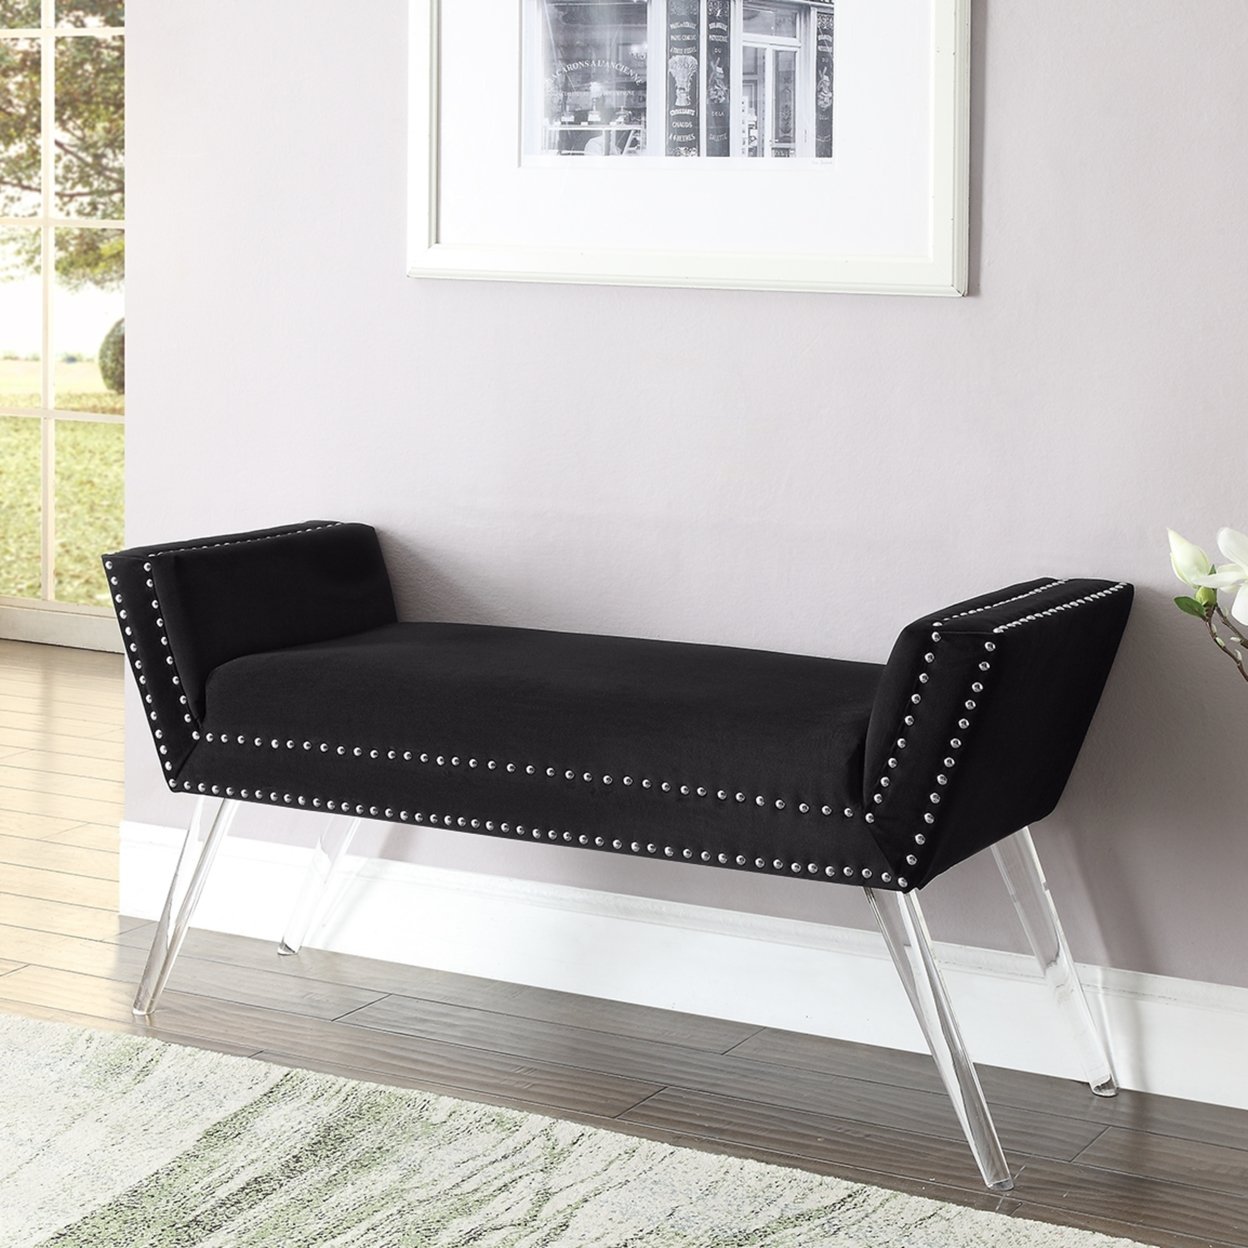 Dhyan Velvet Upholstered Bench-Modern Acrylic Legs-Nailhead Trim-Living-room, Entryway, Bedroom - Black